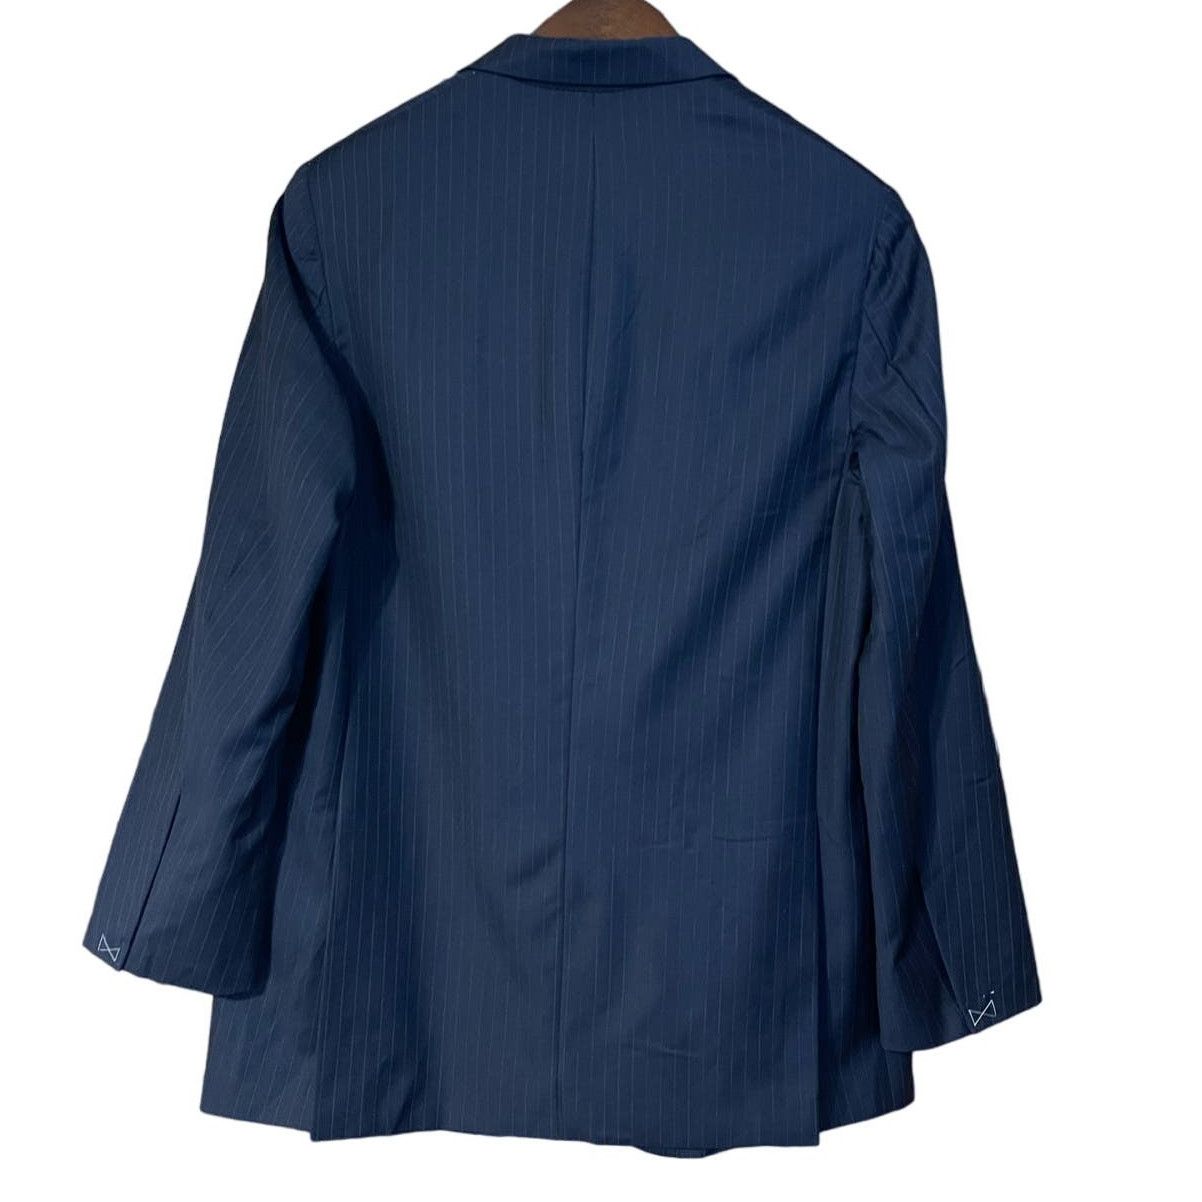 Hickey Freeman Hickey Freeman Mens Blue Pinstripe Sports Jacket Blazer 42R Size 42R - 3 Thumbnail